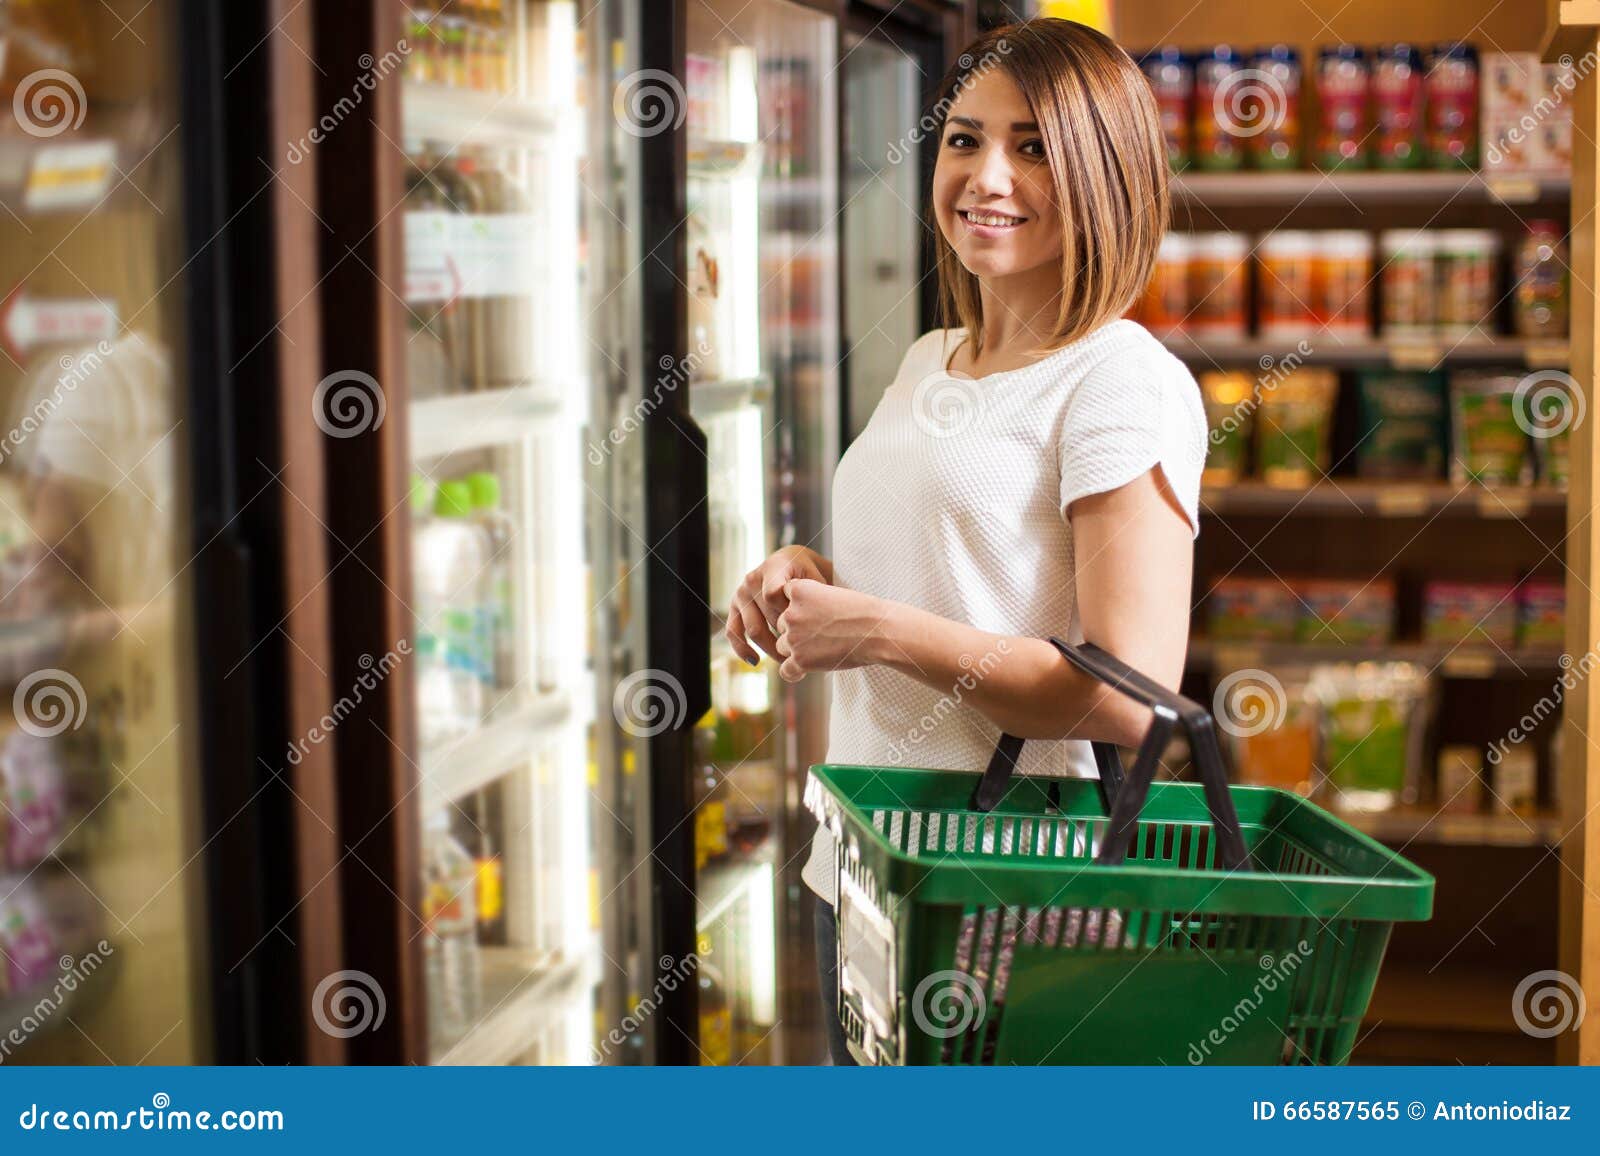 cute latin woman at a supermarket